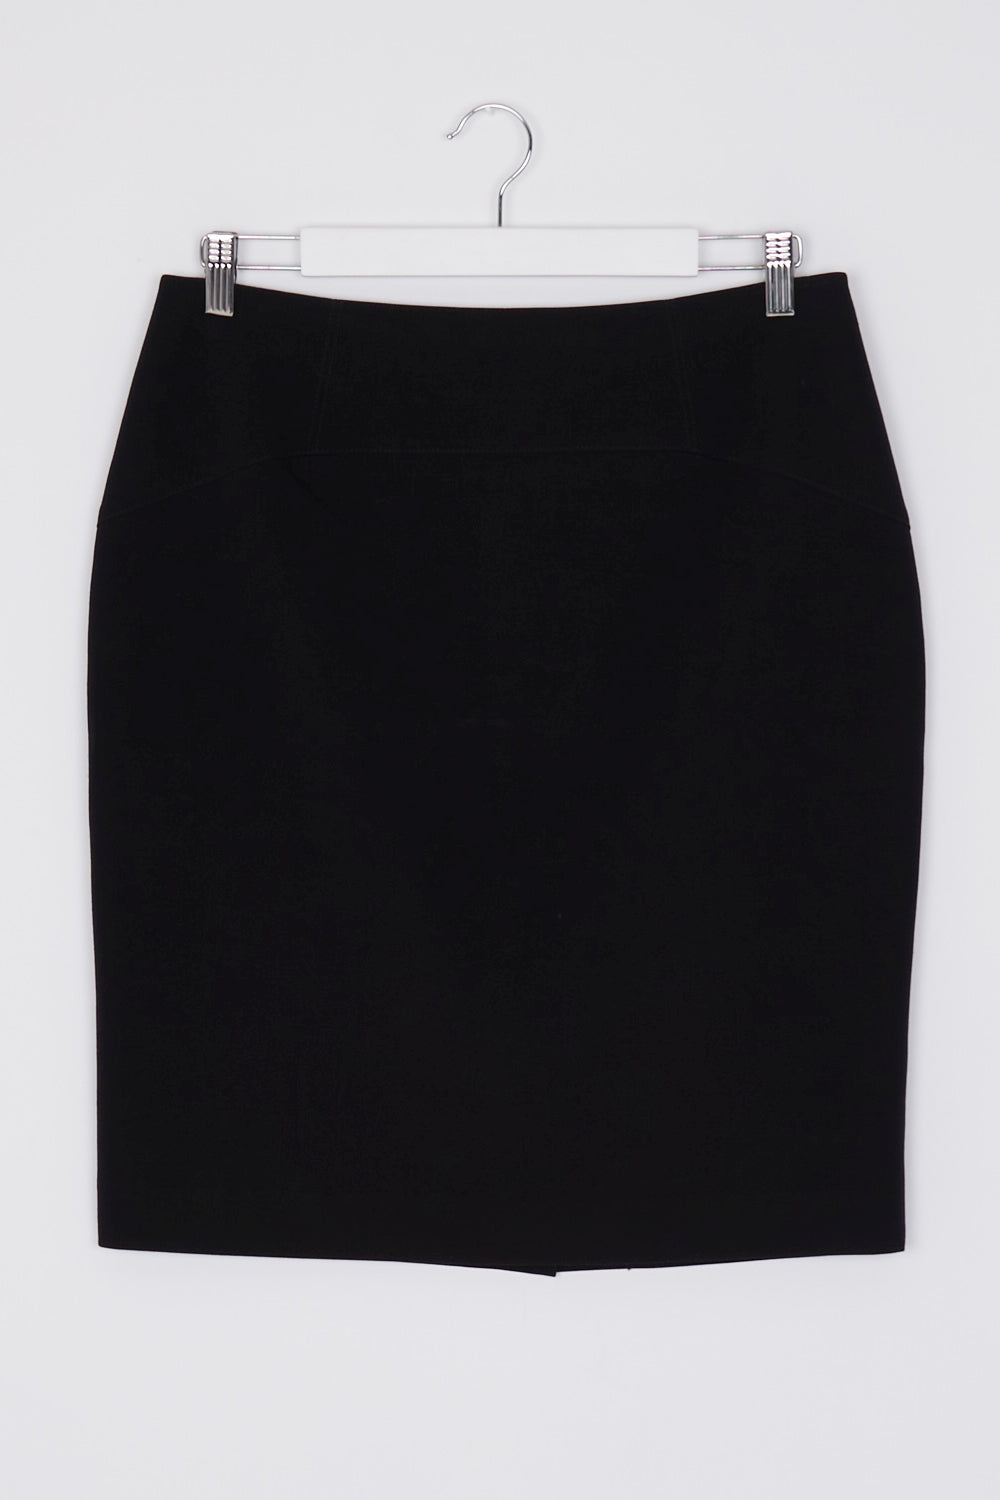 Cue Black Pencil Skirt 12